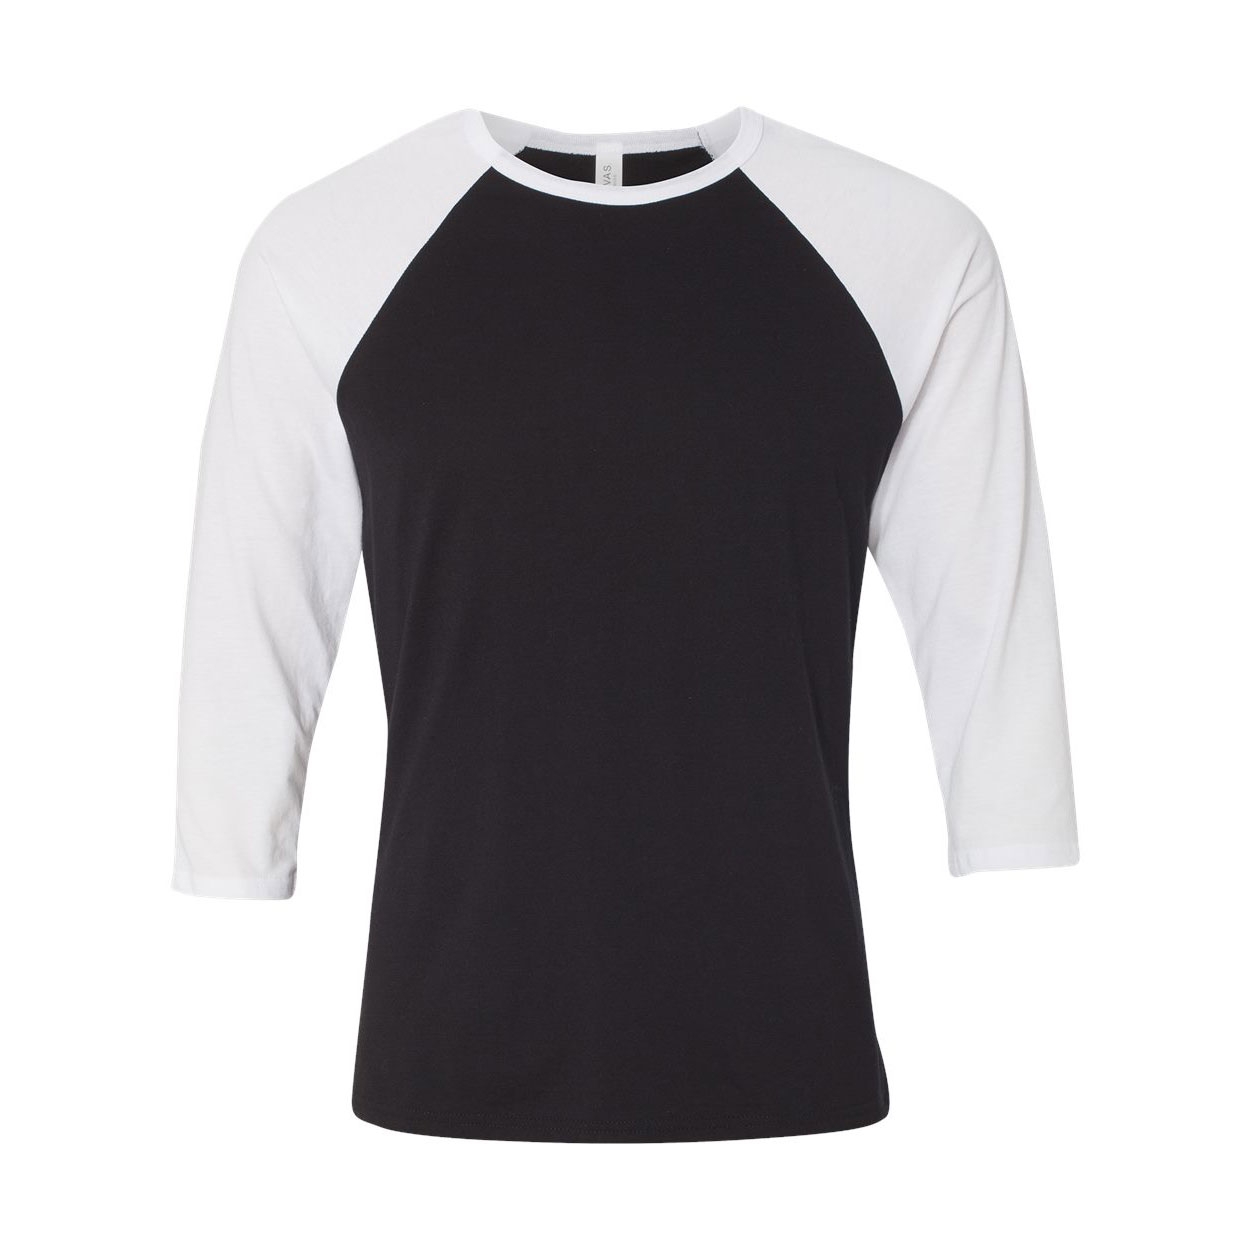 Product Details: Premium Shirt – Raglan 3/4 Sleeve “Night Out” Style - Black/White Sleeves (Bella + Canvas 3200 Tri-Blend 3/4-Sleeve Baseball T-Shirt)